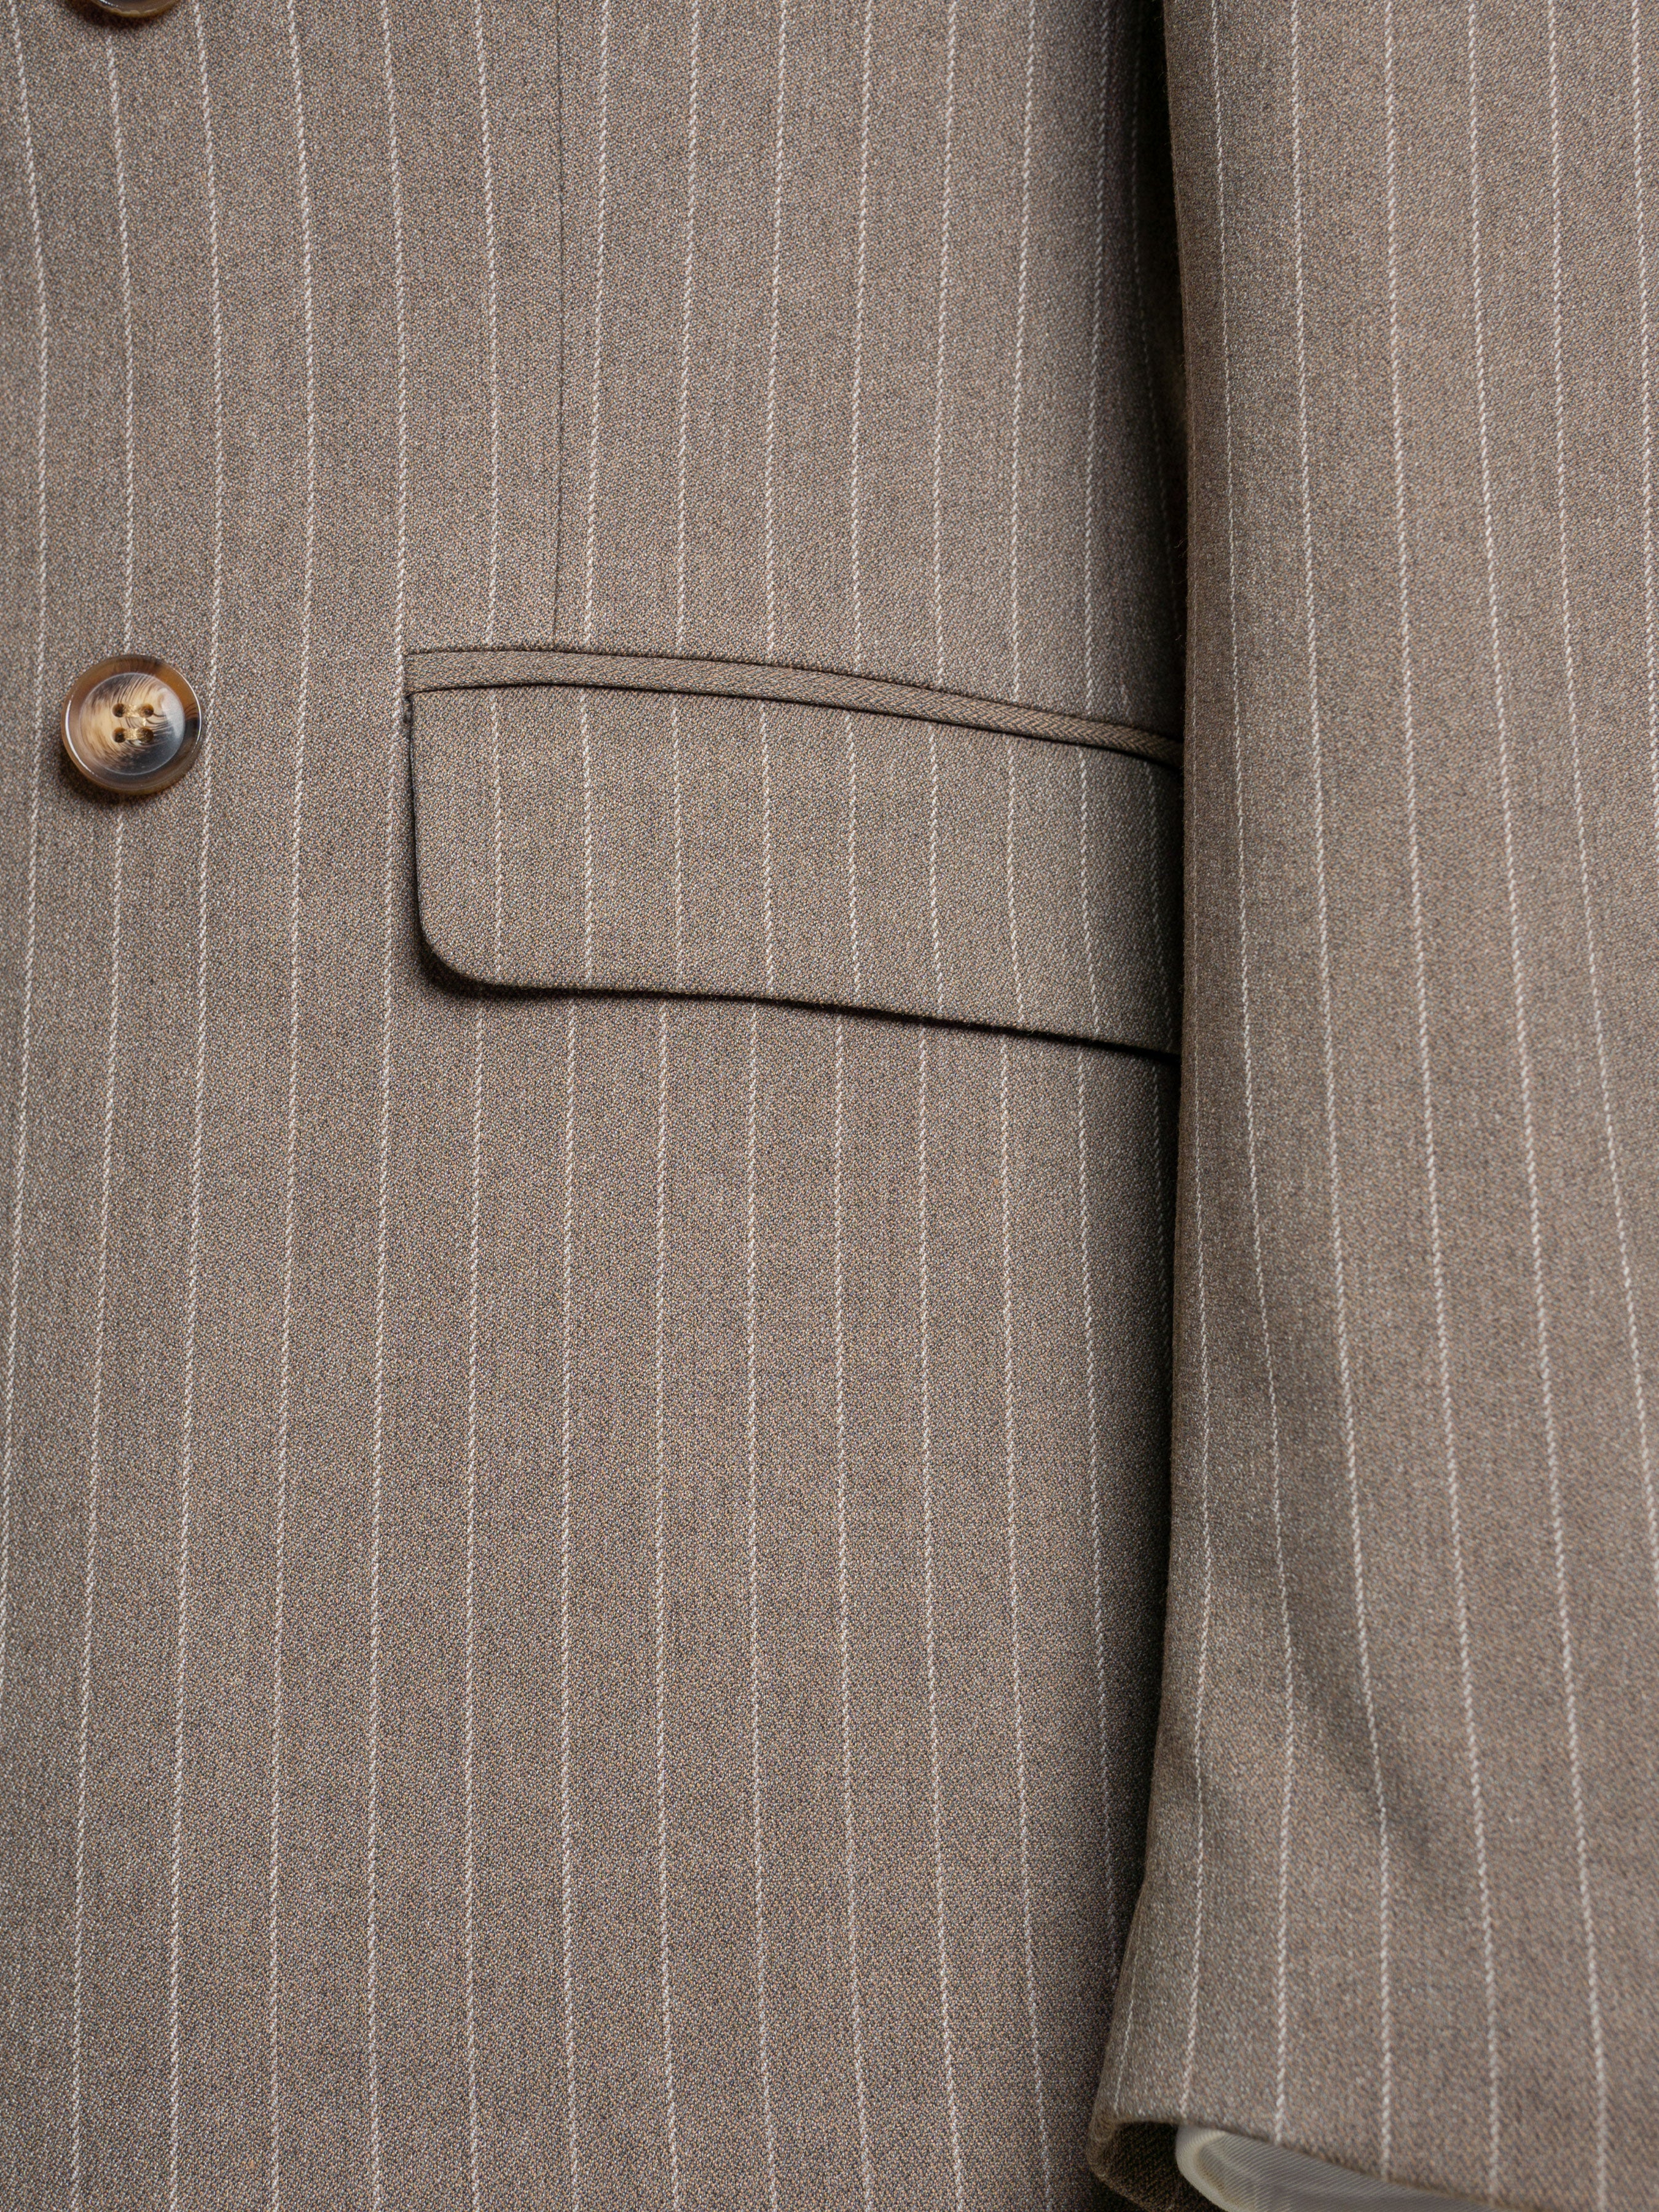 Double Breasted Suit Blazer - Brown Pinstripes (Peak Lapel) - Zeve Shoes